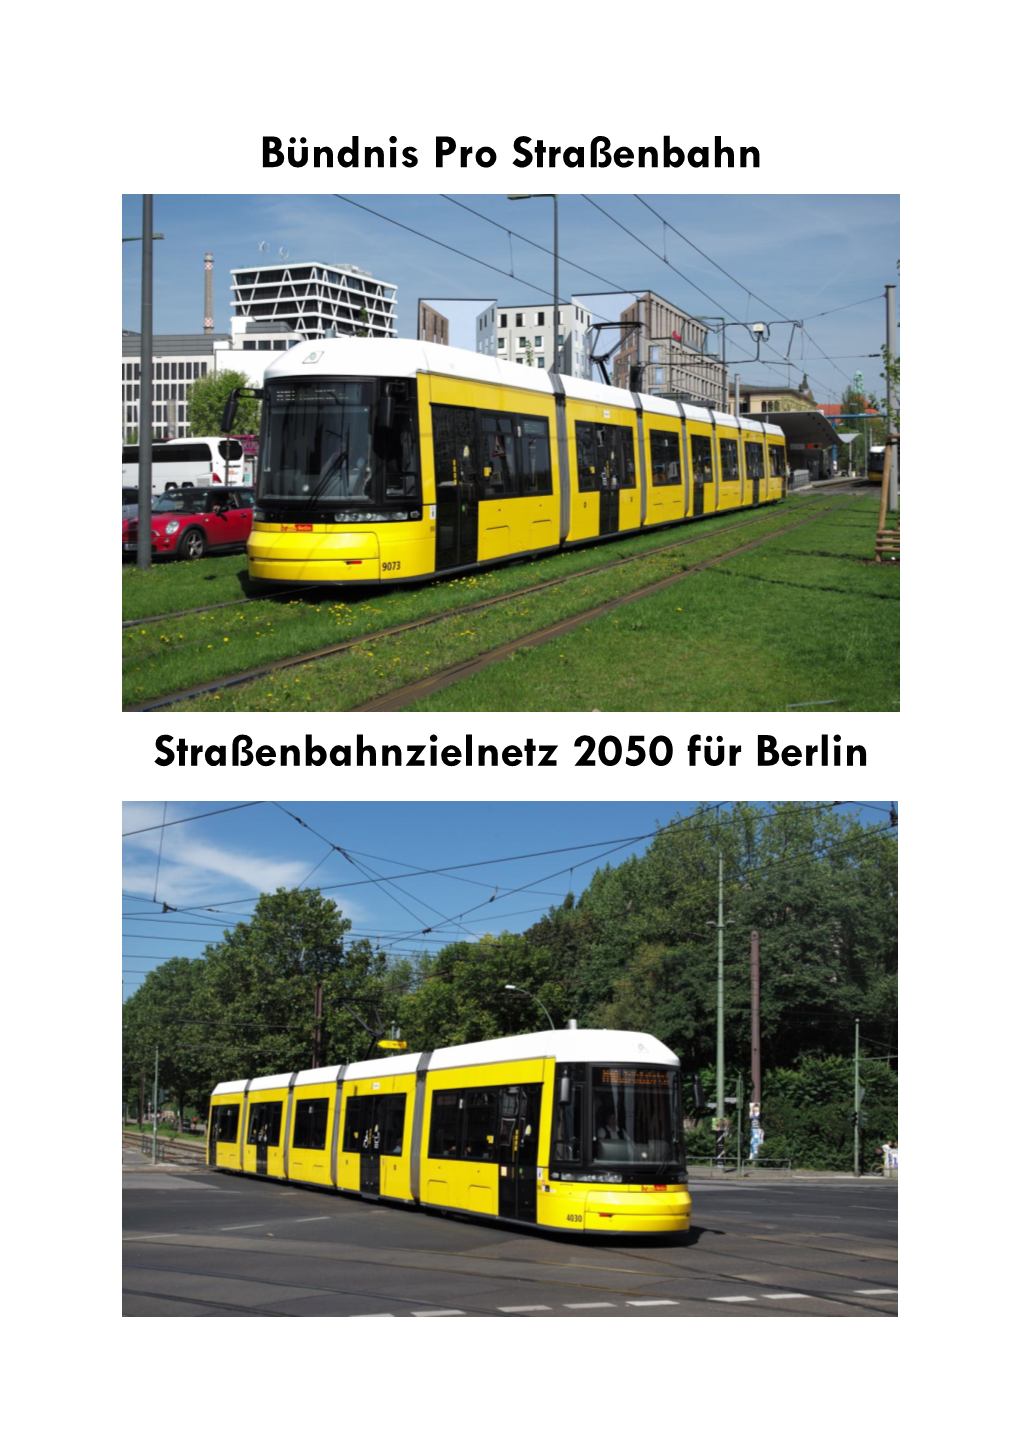 Bündnis Pro Straßenbahn – Zielnetz Berlin 2050